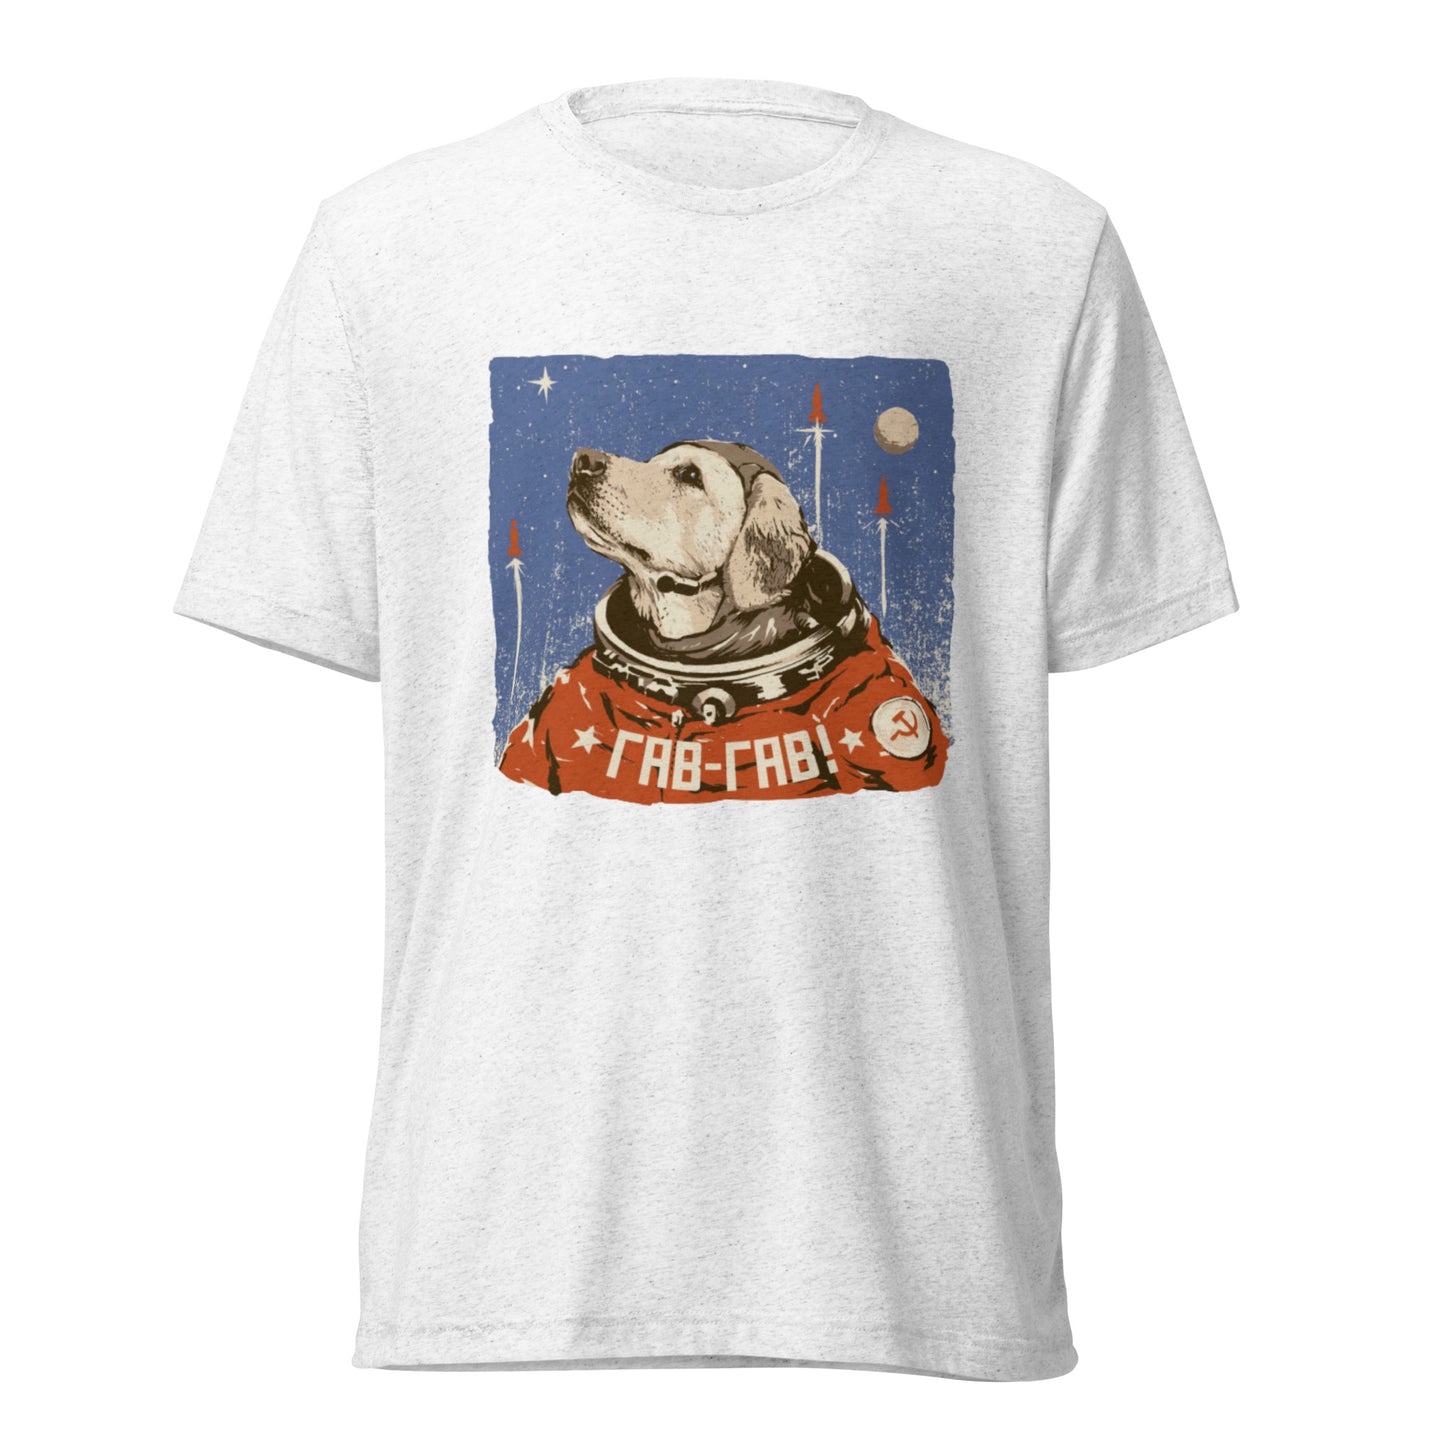 Space Lab Short sleeve t-shirt